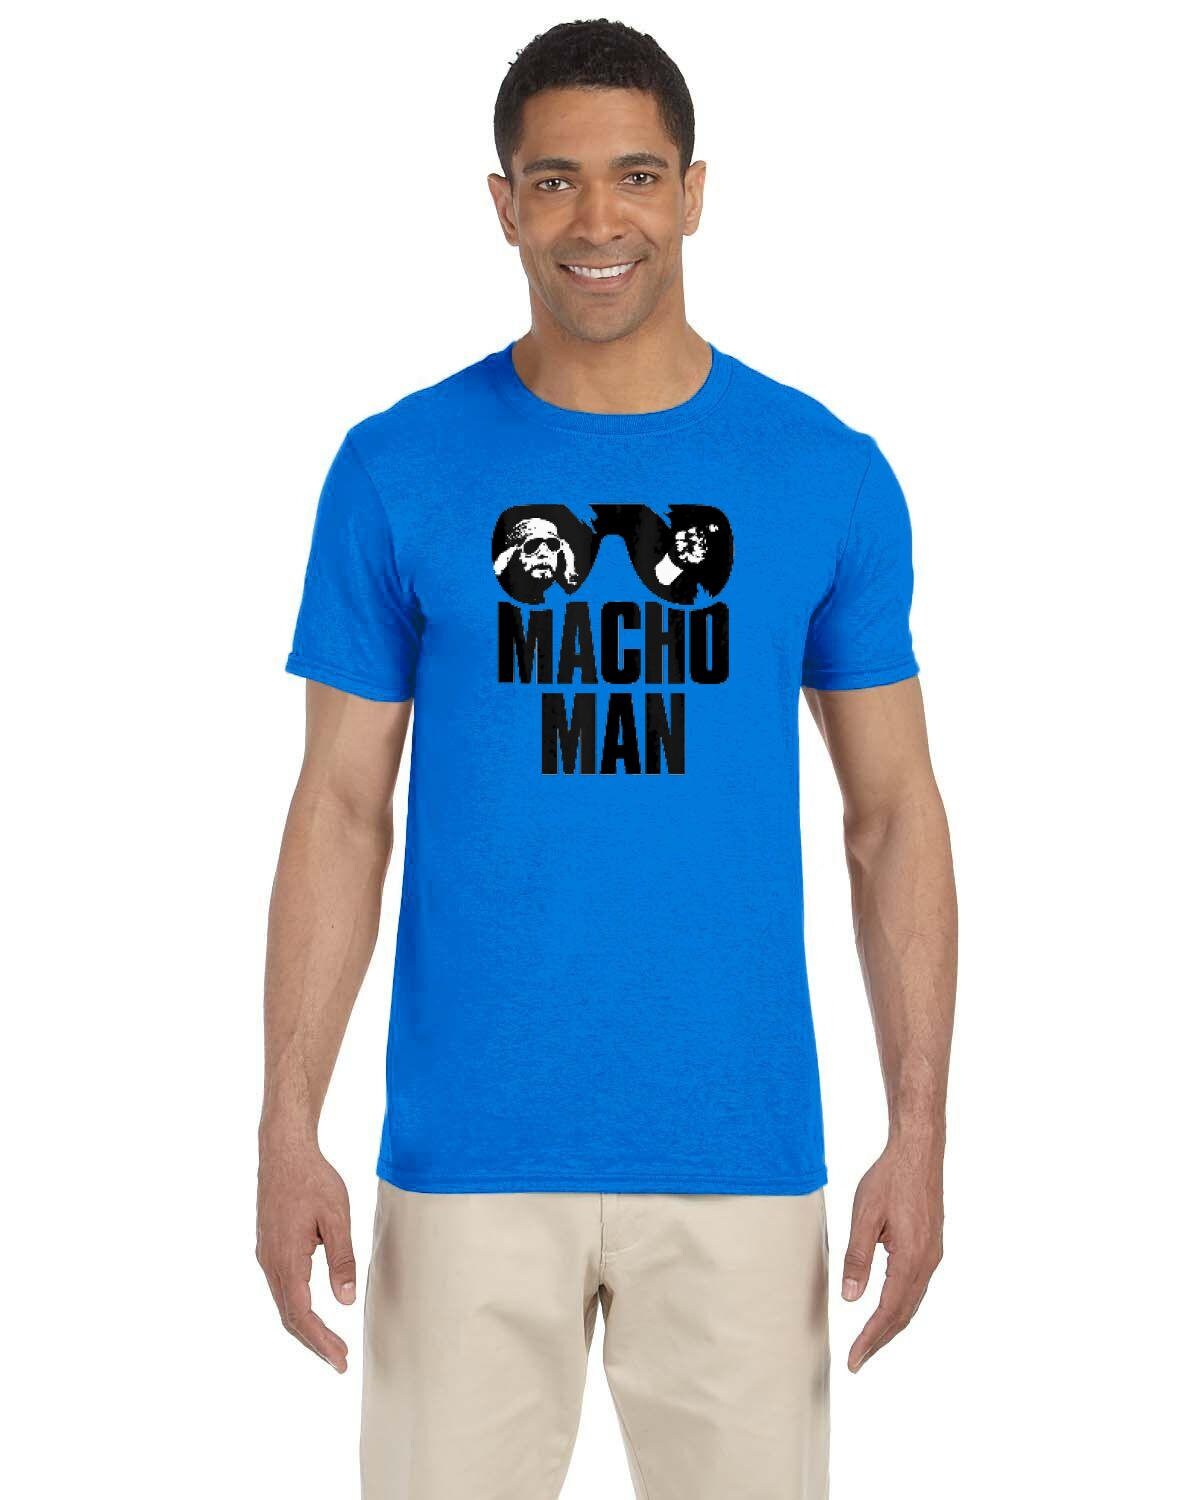 Discover Macho Man Caricature Unisex Tshirt